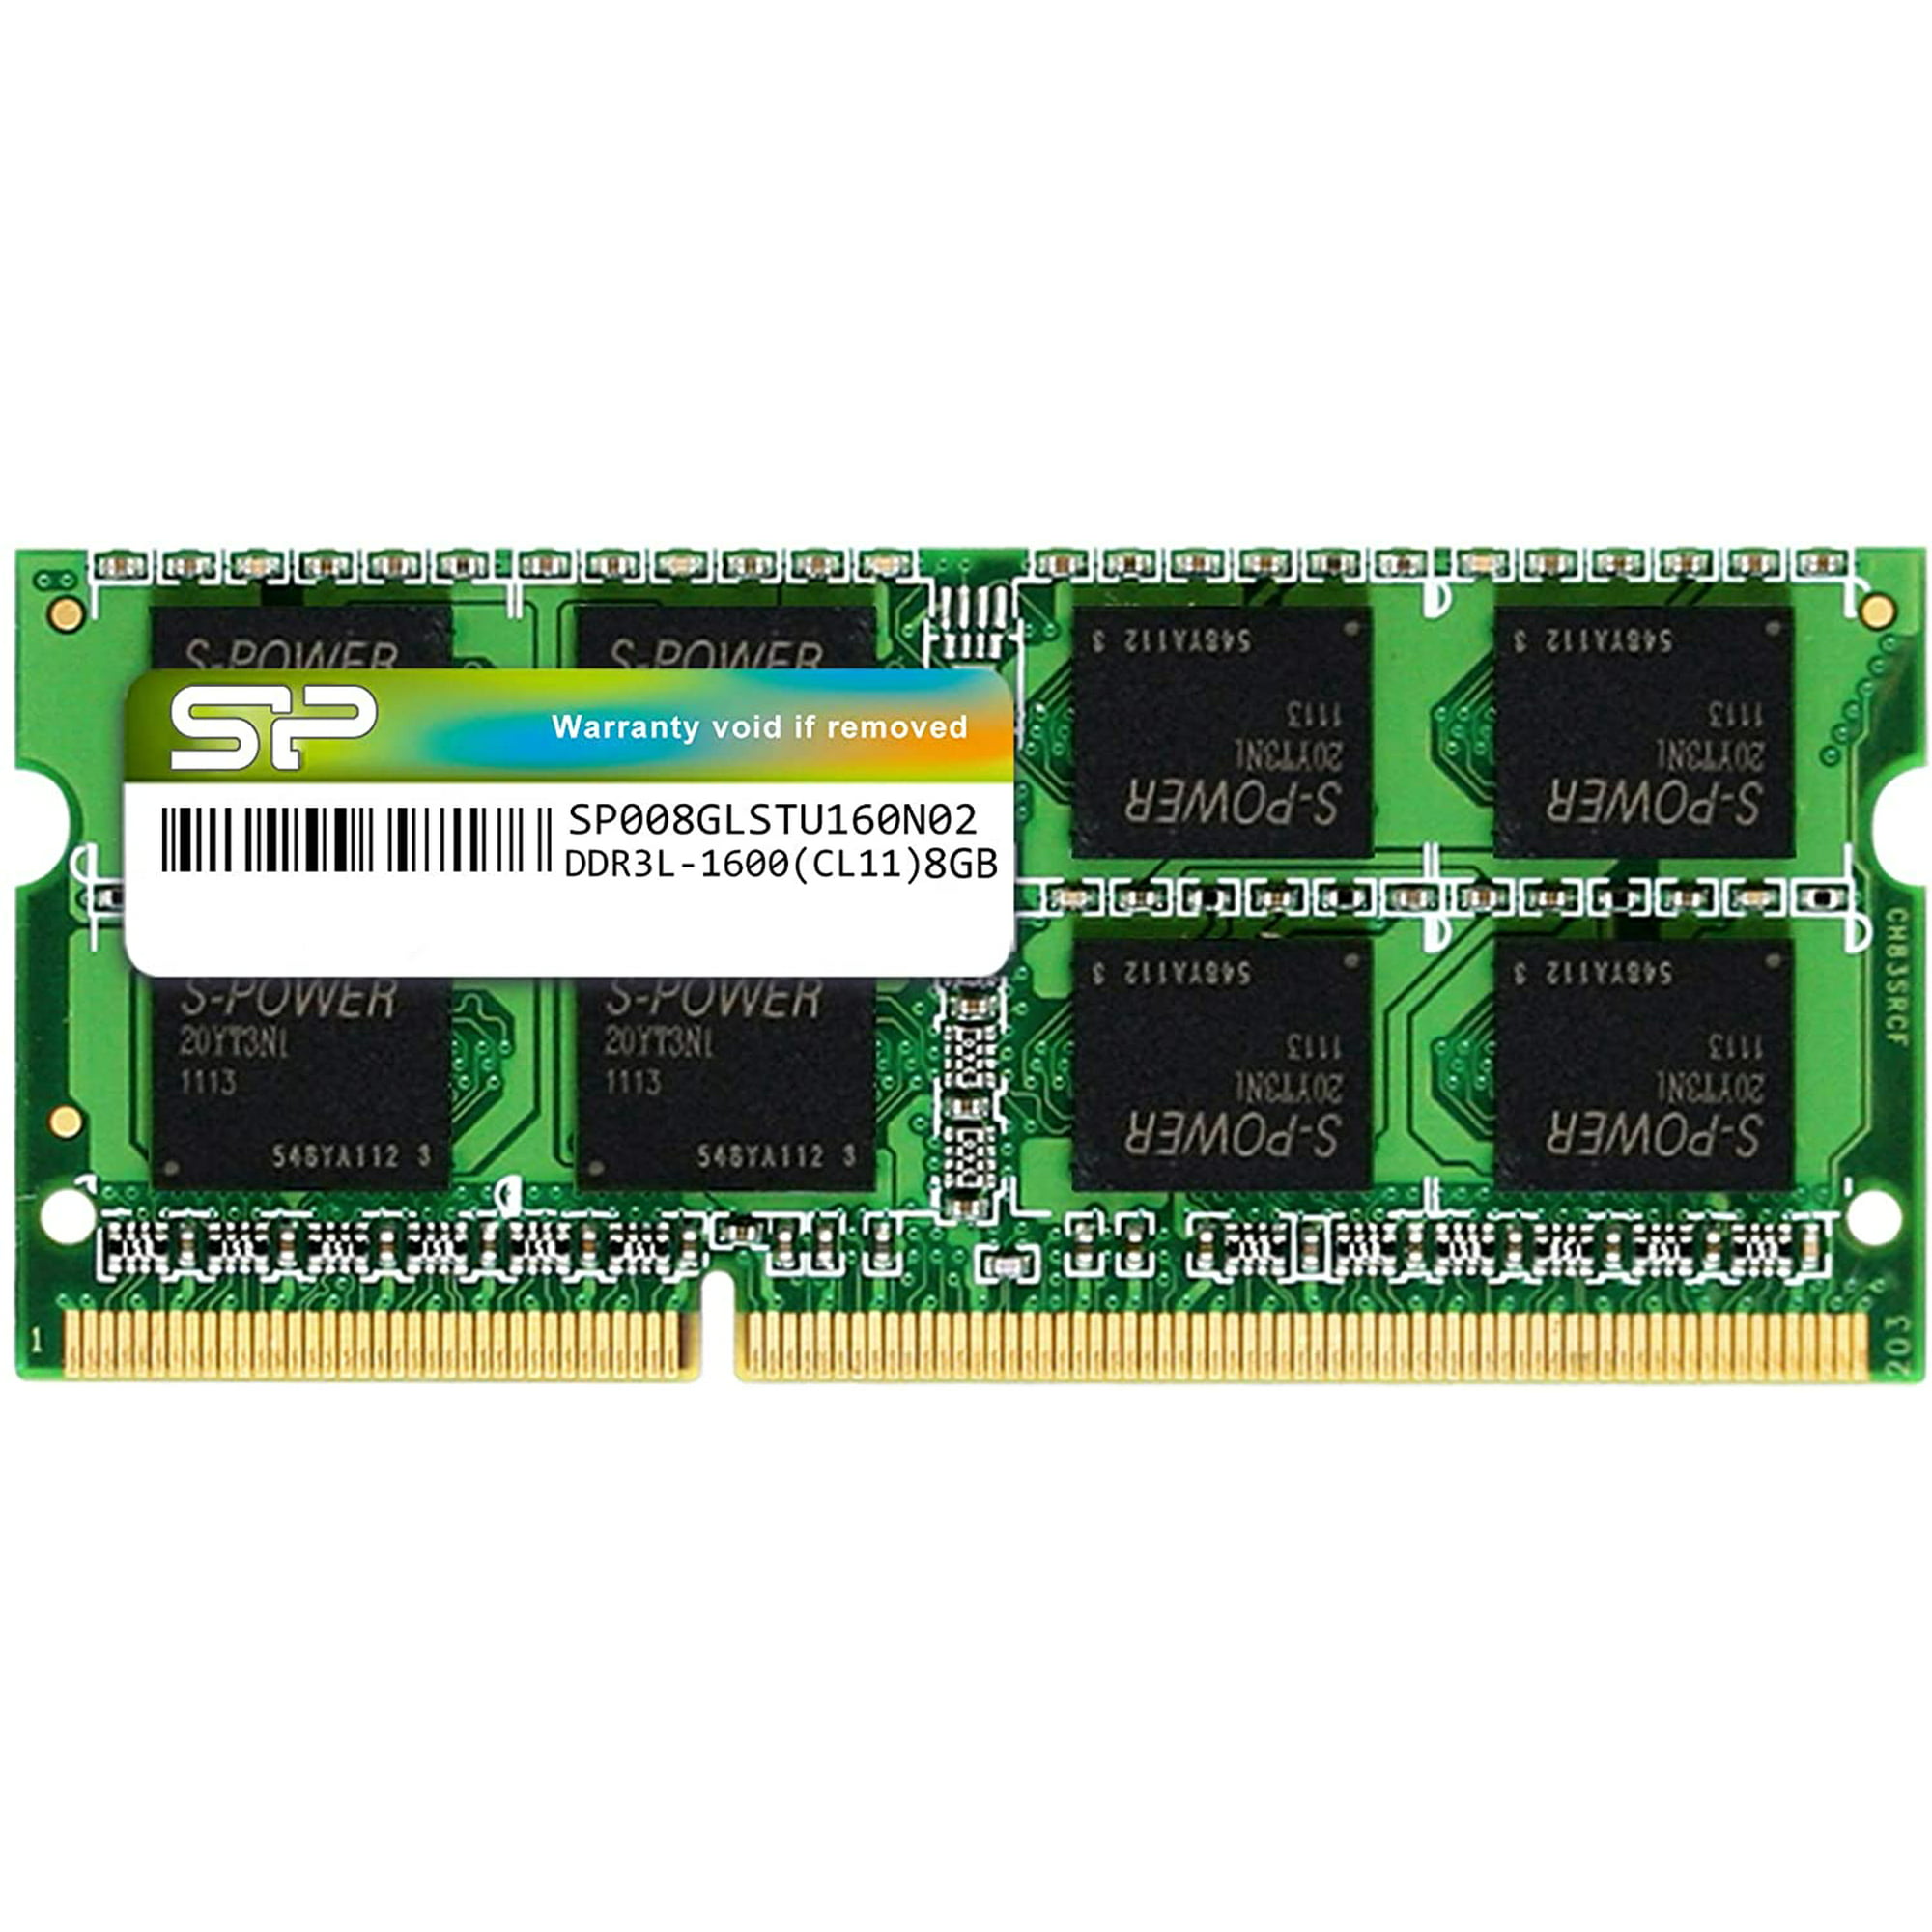 Power 8GB-DDR3L-1600MHz (PC3 12800) 204 pin CL11 1.35V Non-ECC Unbuffered SODIMM-Laptop Memory Module - Low | Walmart Canada